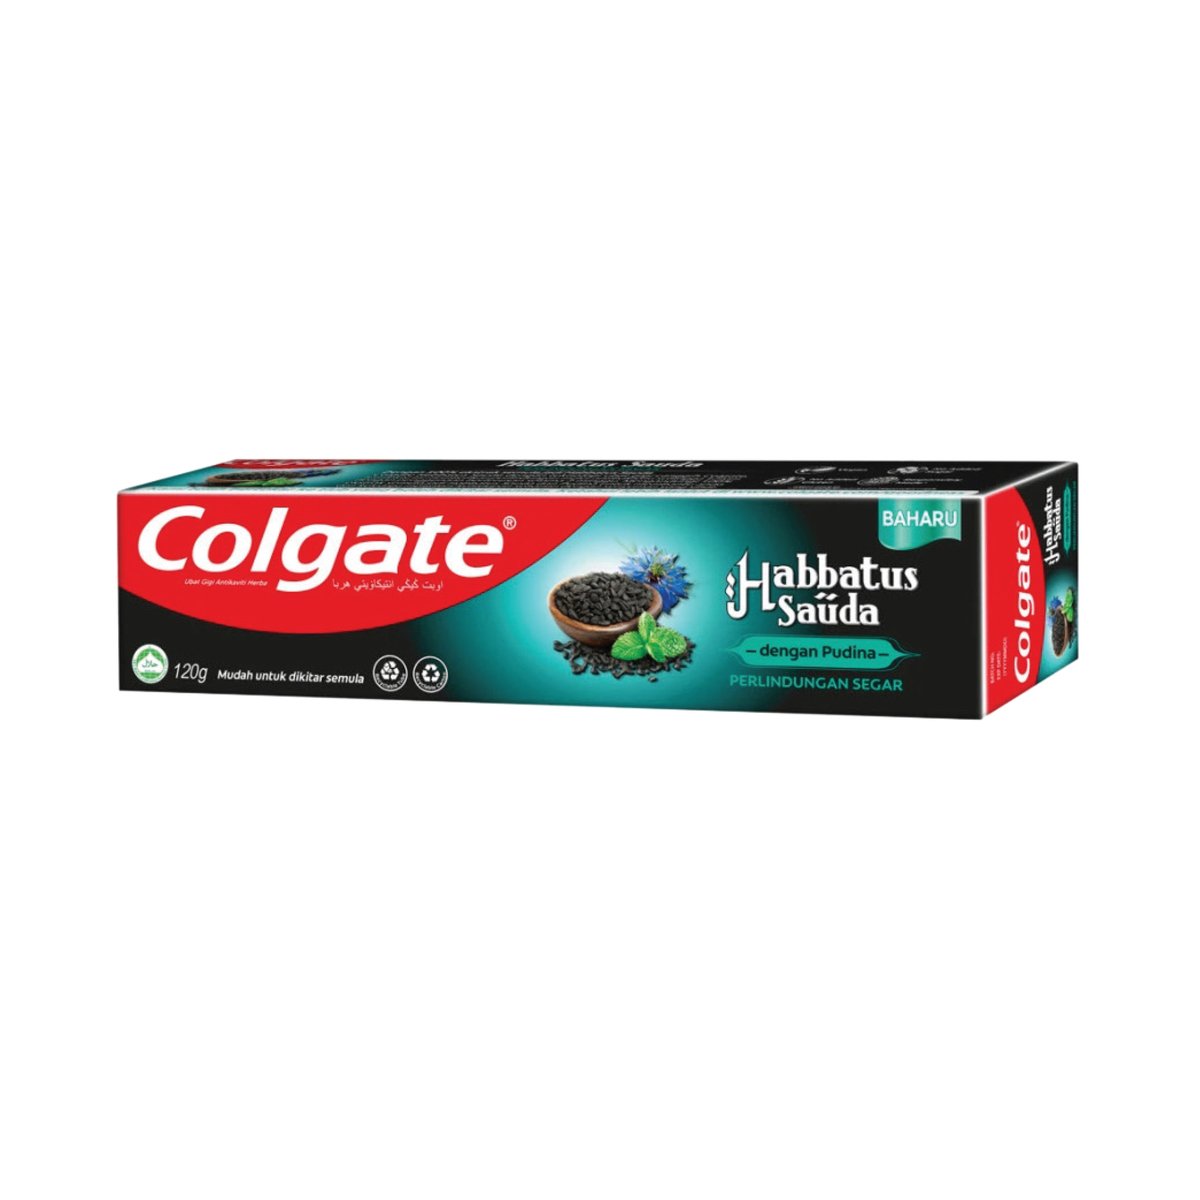 Colgate Toothpaste Habbatus Sauda Mint 120g